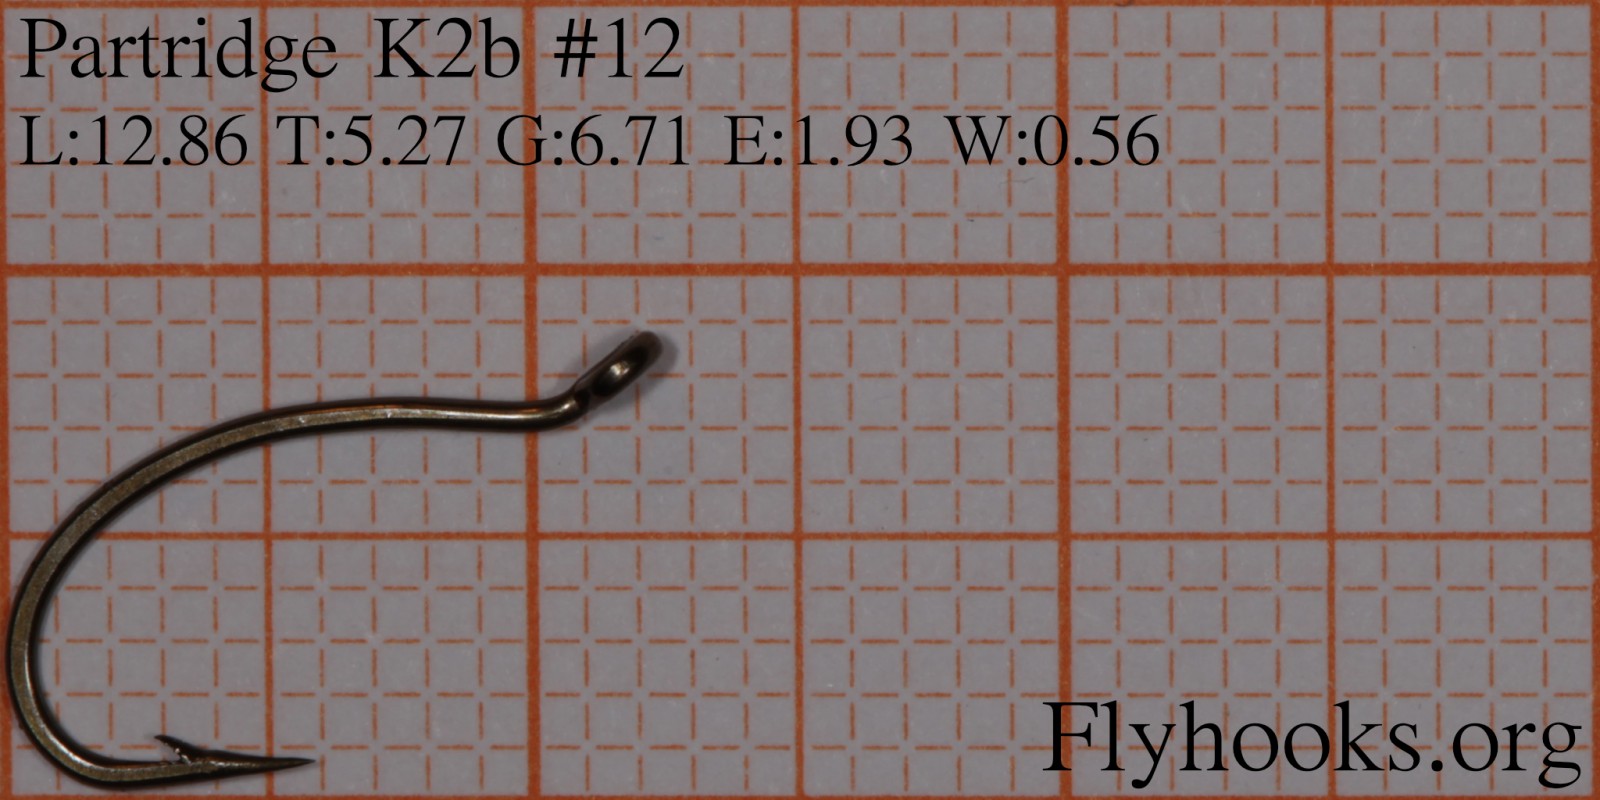 Partridge CS10/2 Bartleet Supreme Salmon Up-Eye Single Fly Hooks Fly Tying